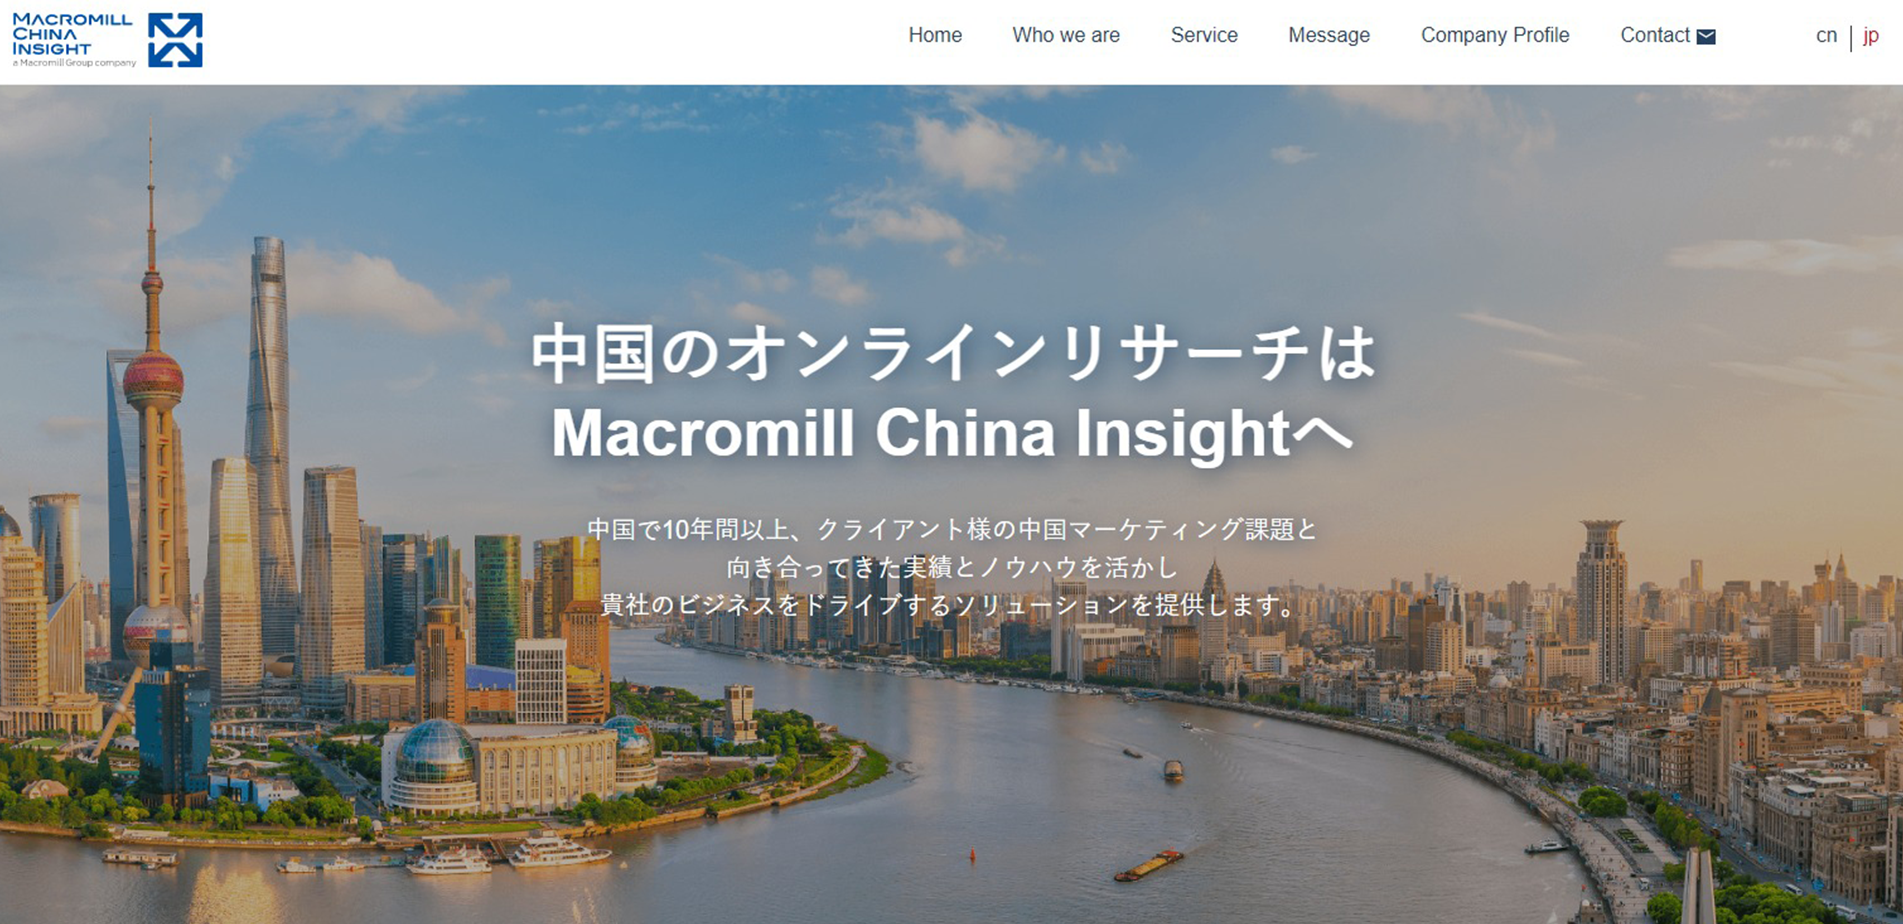 Macromill China Insight, Inc.